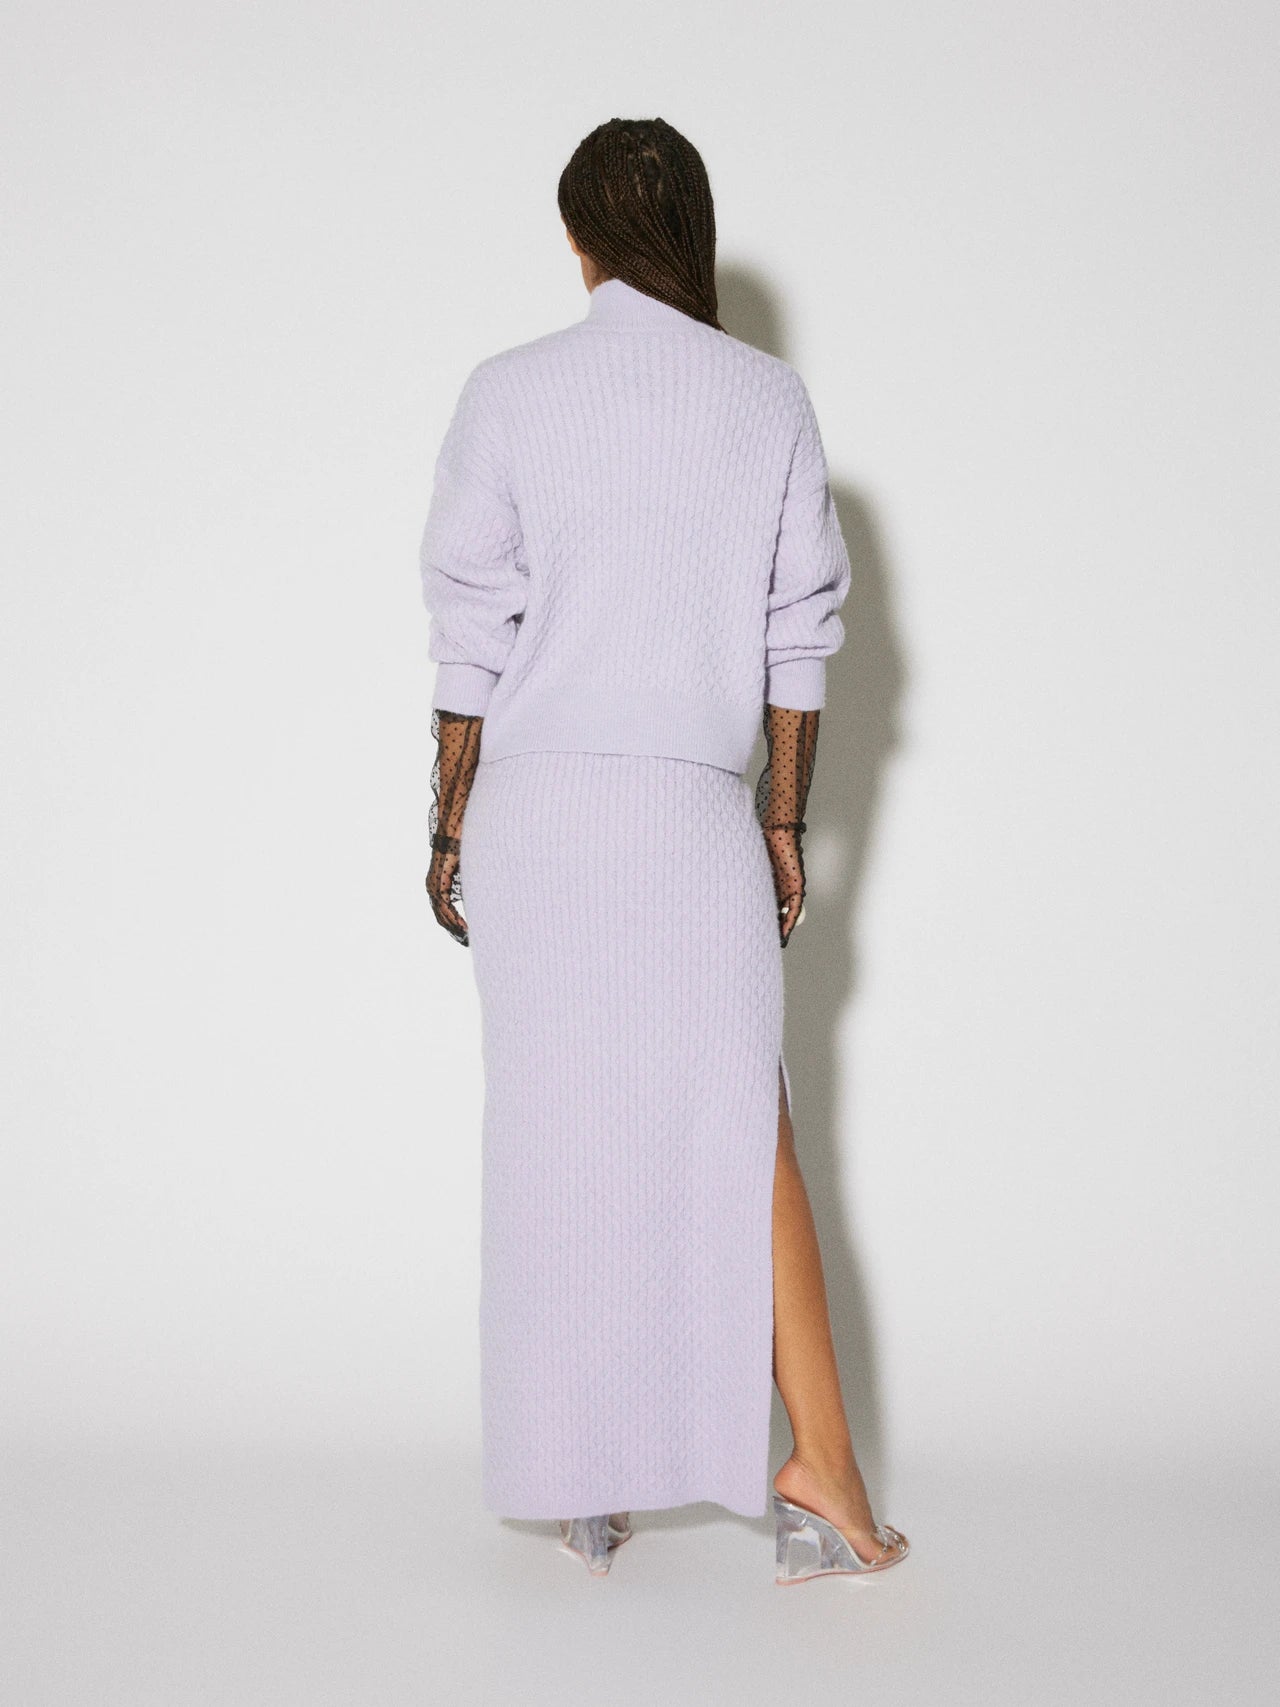 Something New - Lilac Wavy Knit Maxi Skirt